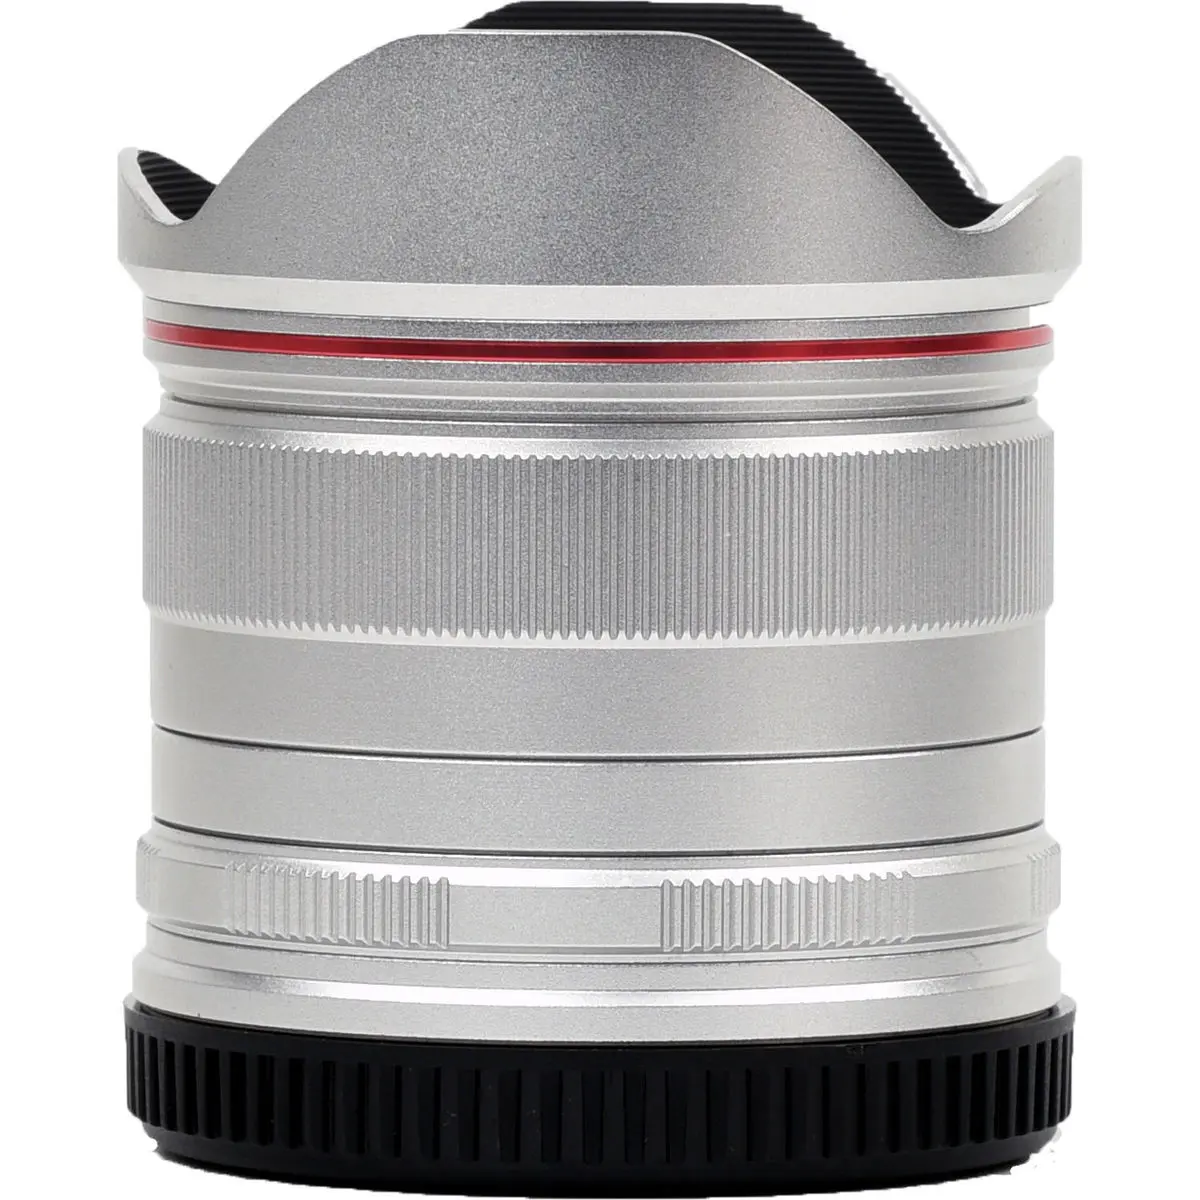 3. LAOWA Lens 7.5mm F/2 MFT Silver (Lightweight Version)